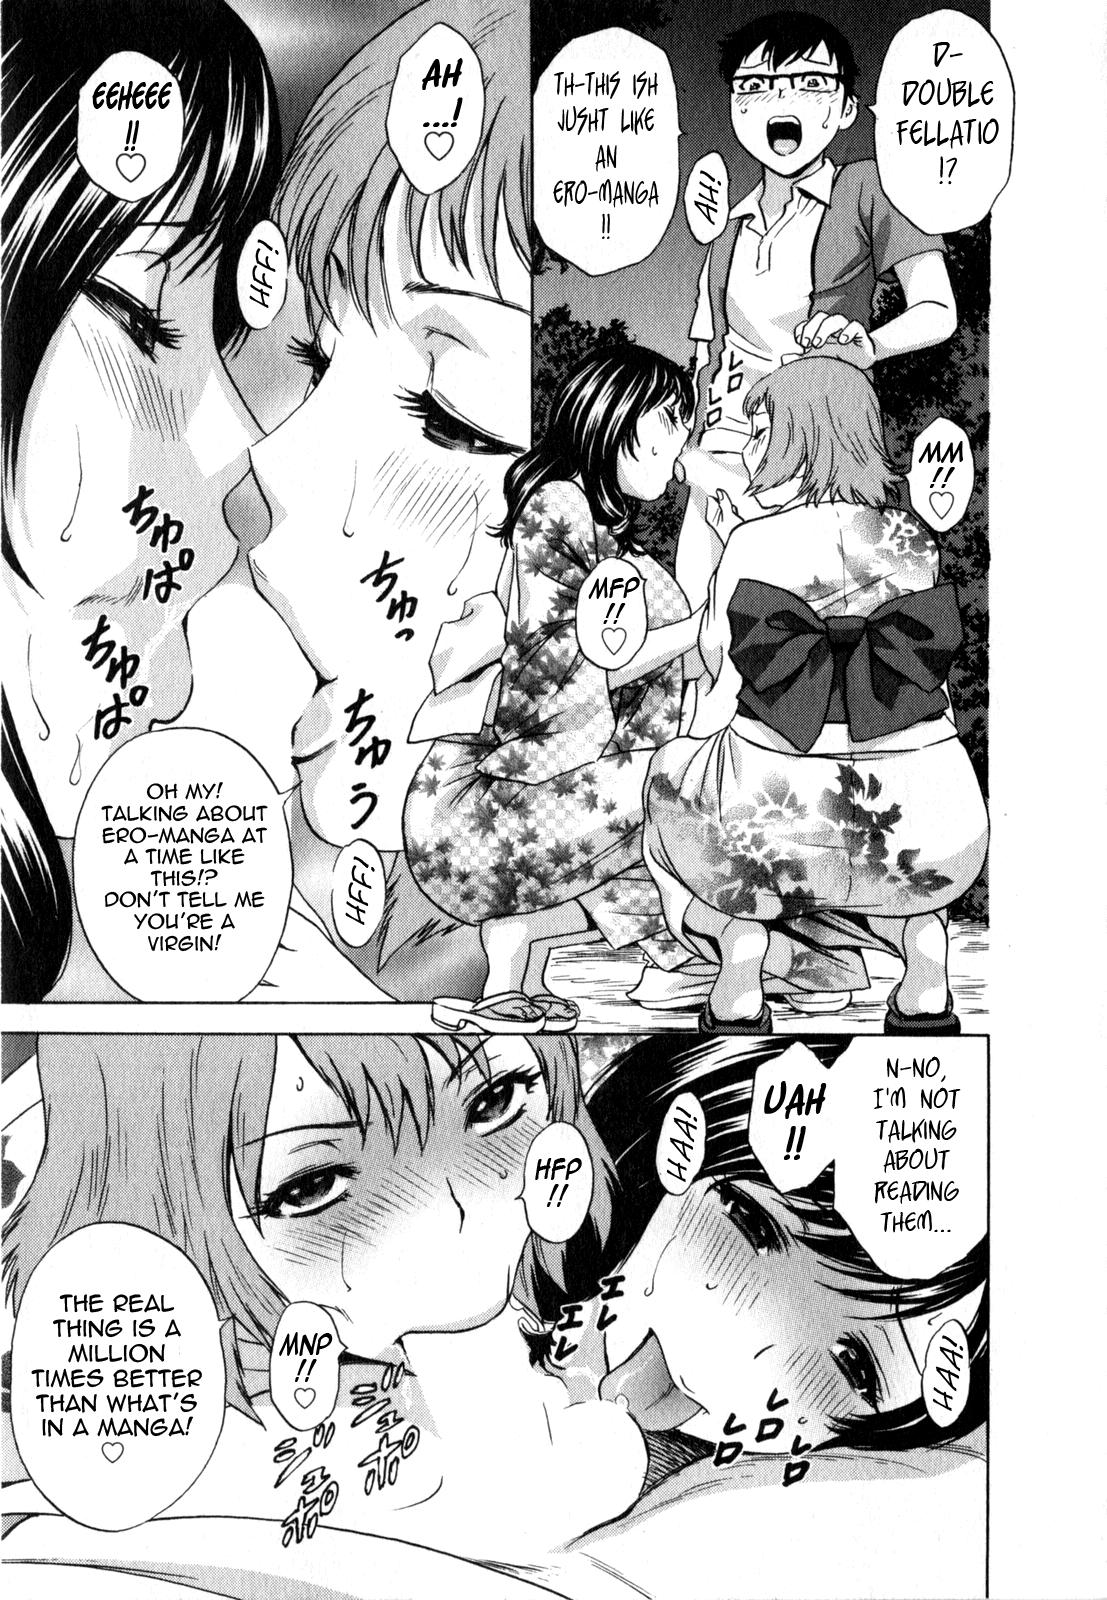 [Hidemaru] Life with Married Women Just Like a Manga 2 - Ch. 1-8 [English] {Tadanohito} 153